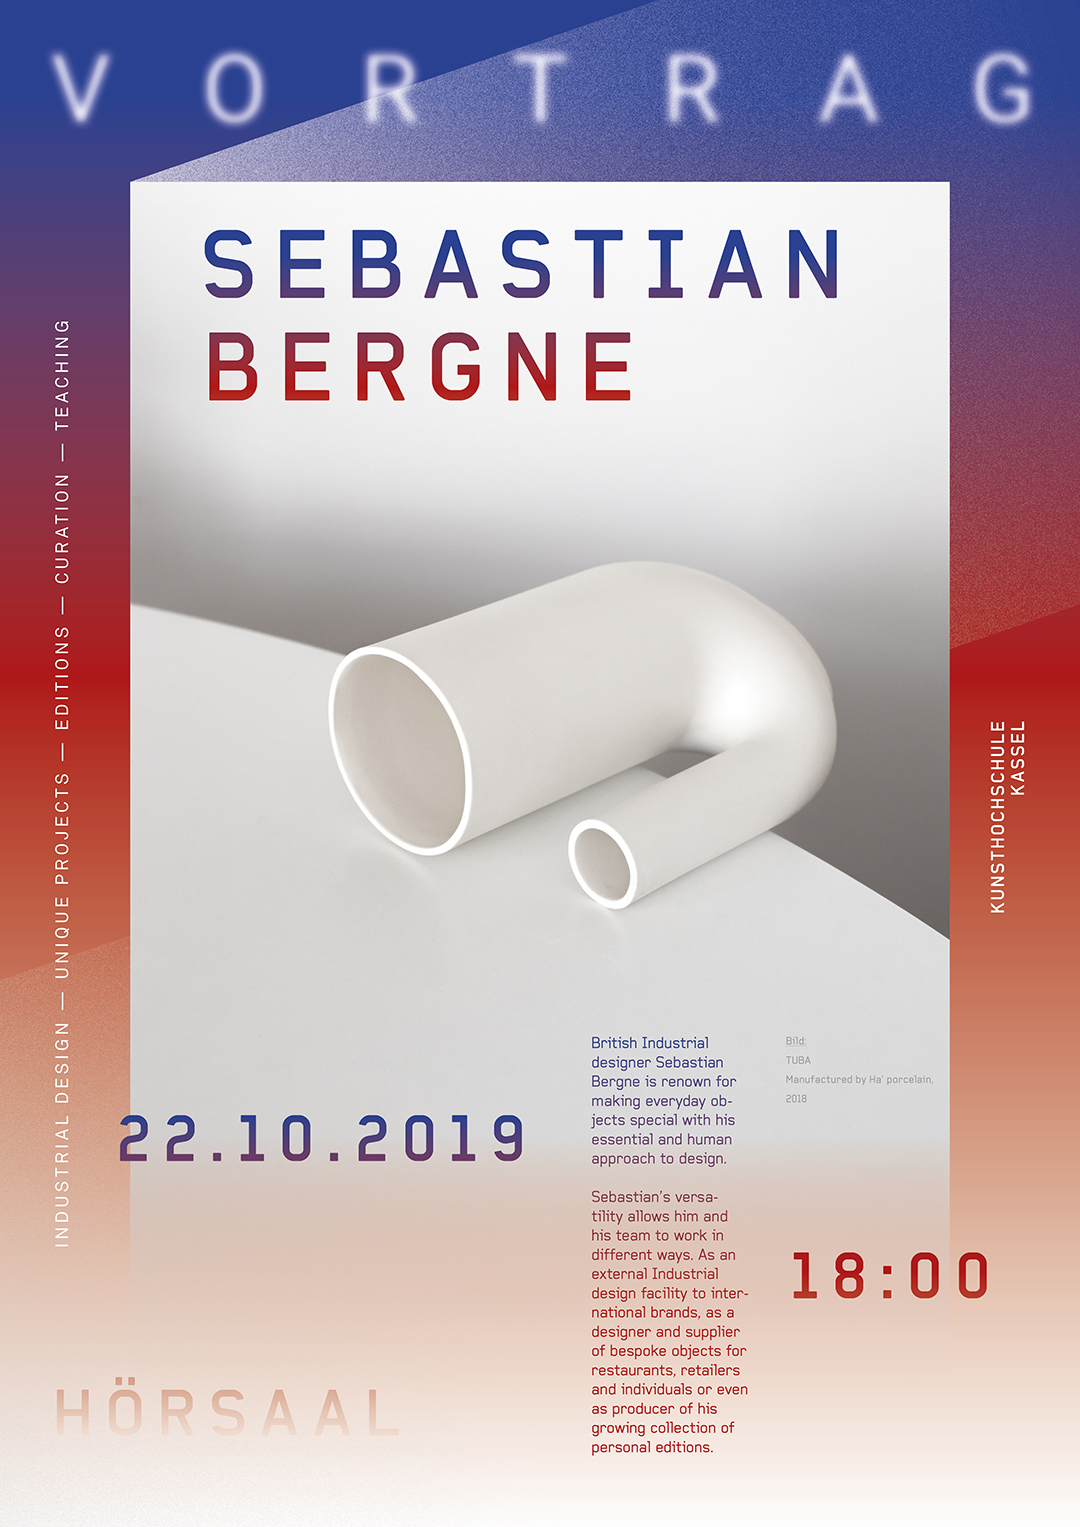 Vortrag: Sebastian Bergne